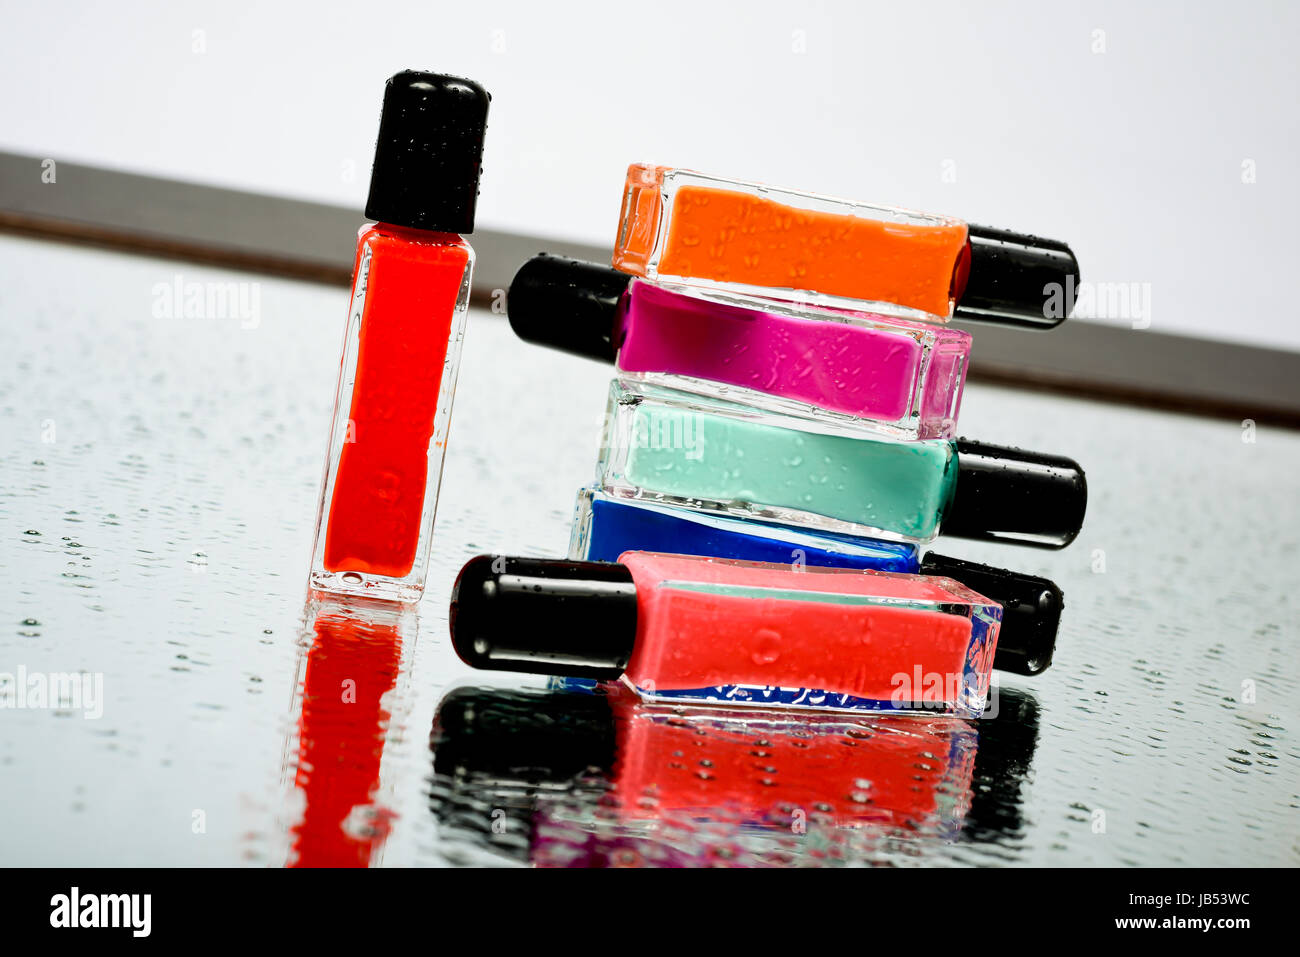 Nail Polish set. Manicure. Colorful Nail Polish Bottles Stock Photo